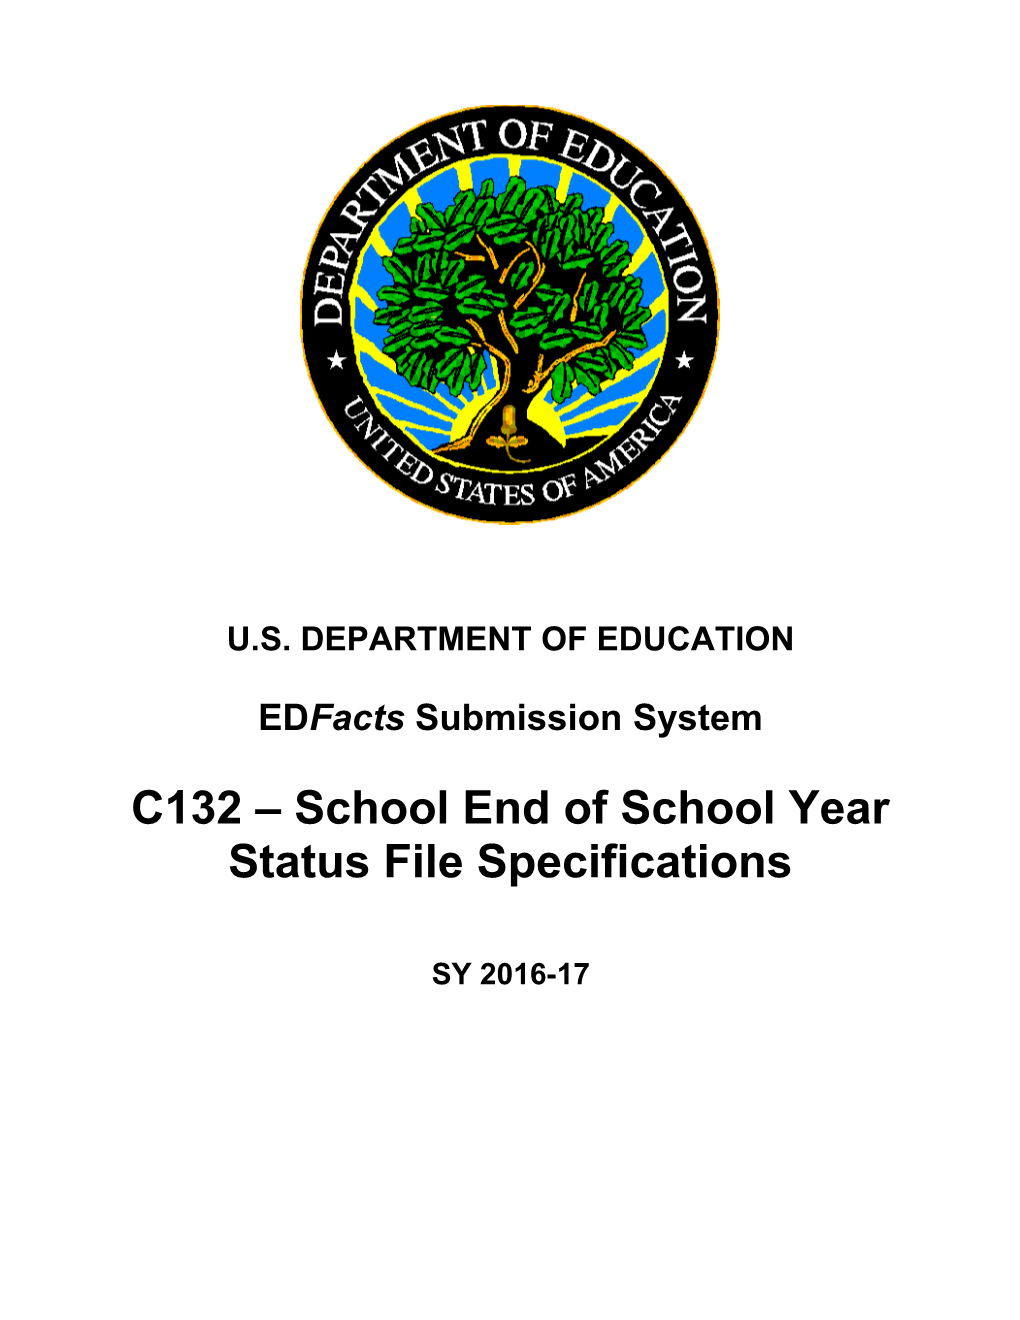 School End of School Year Status File Specifications (Msword)